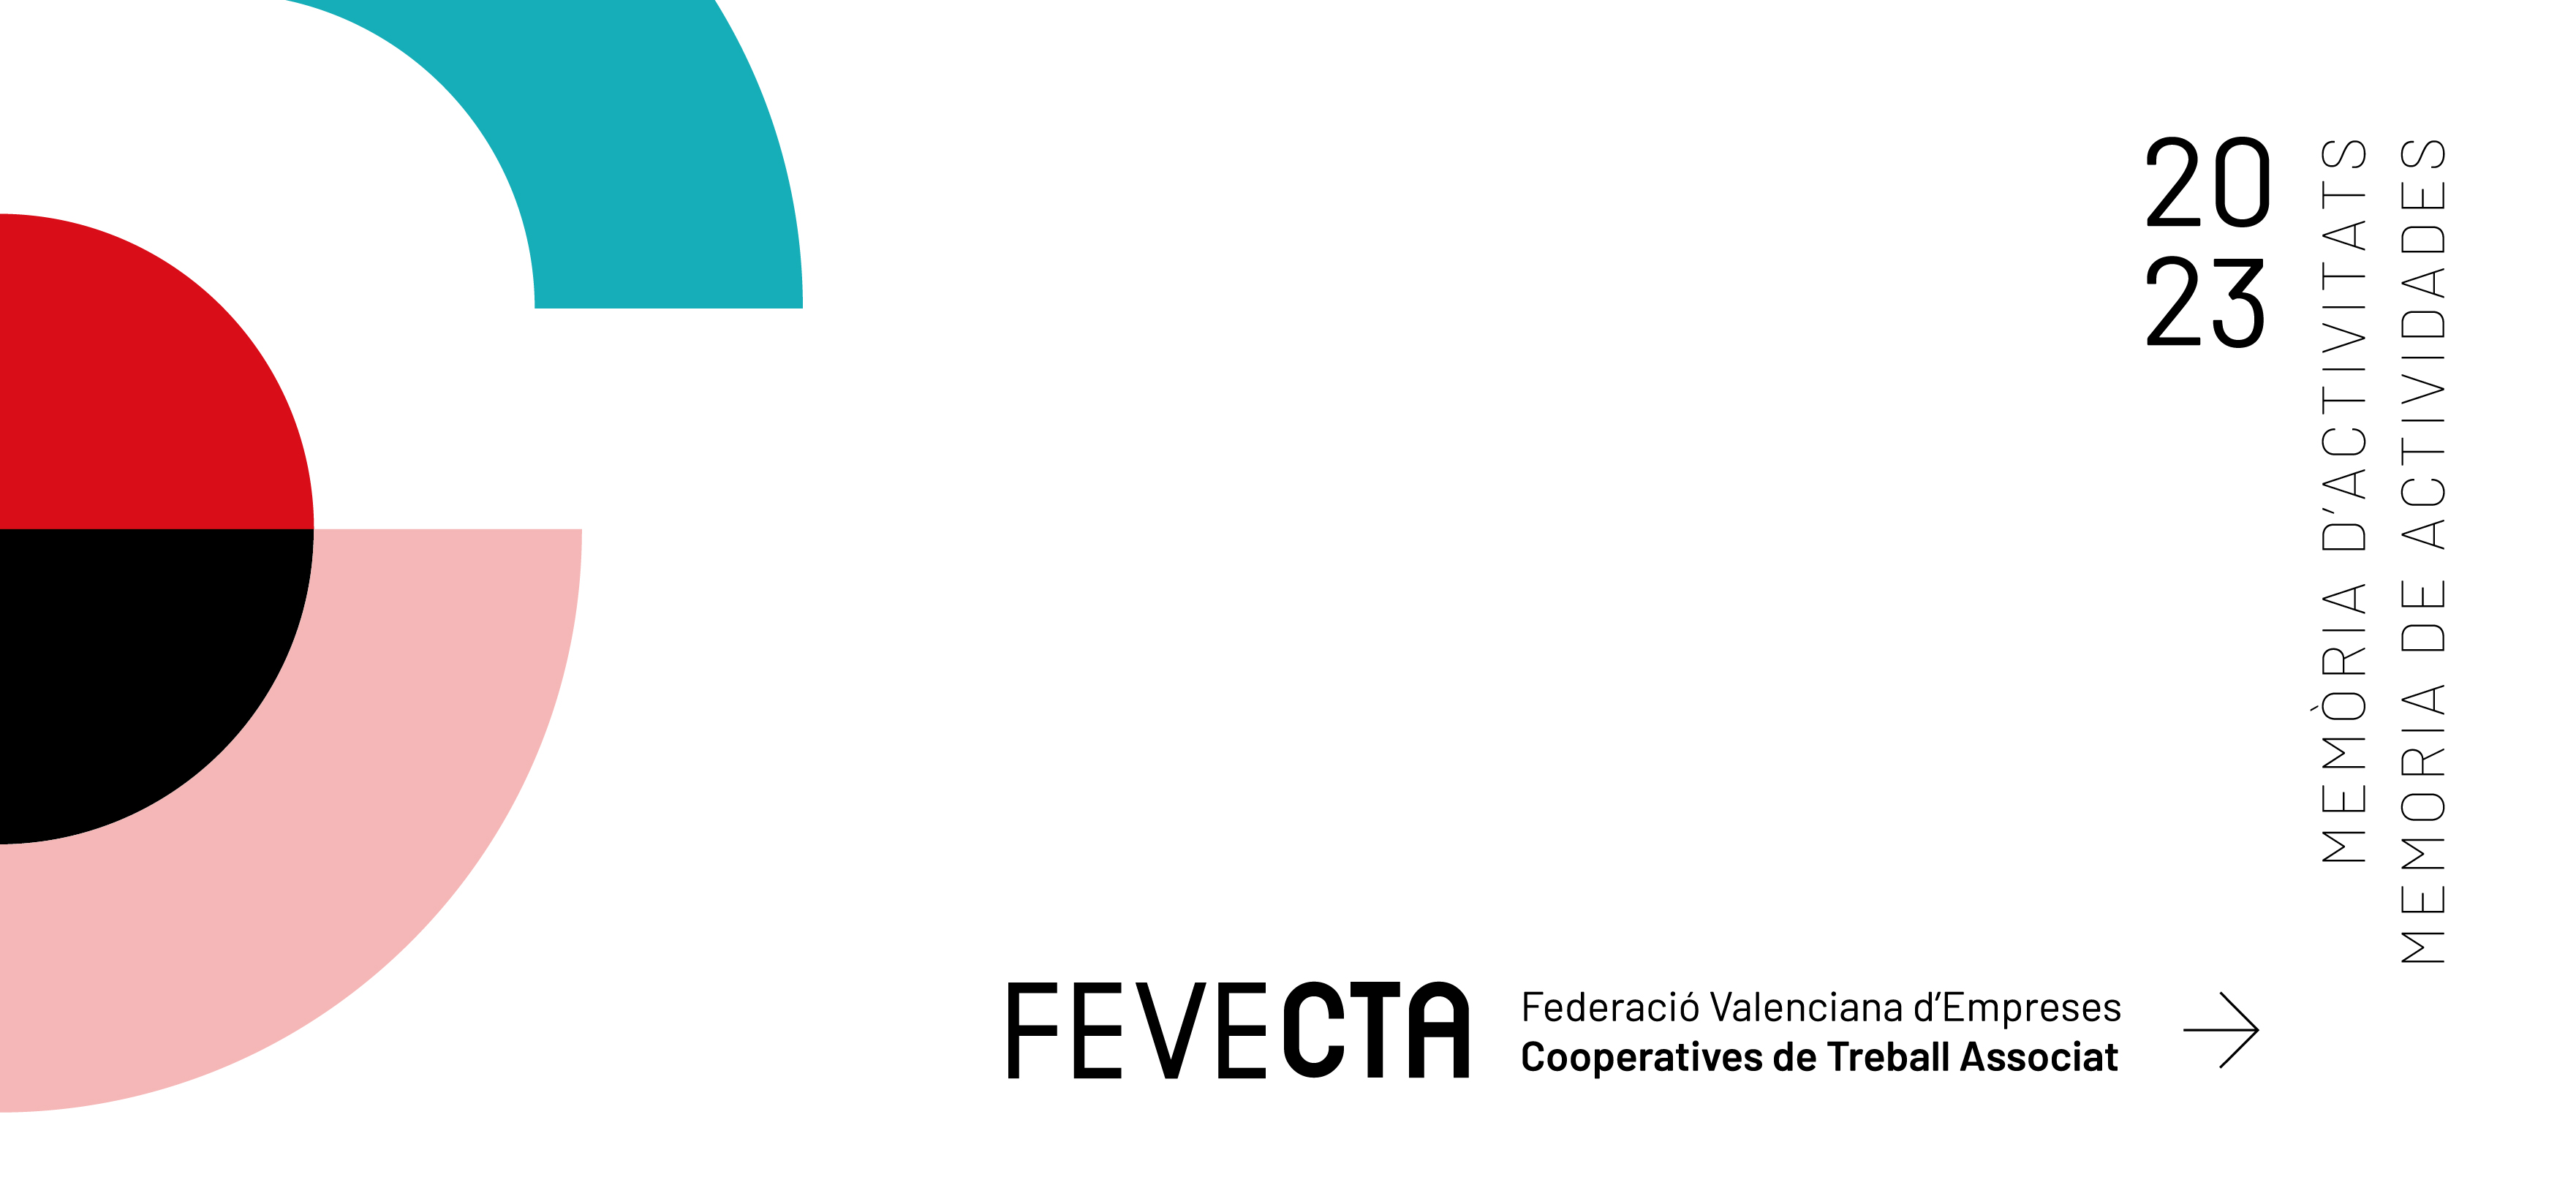 FEVECTA publica su memoria anual de actividades